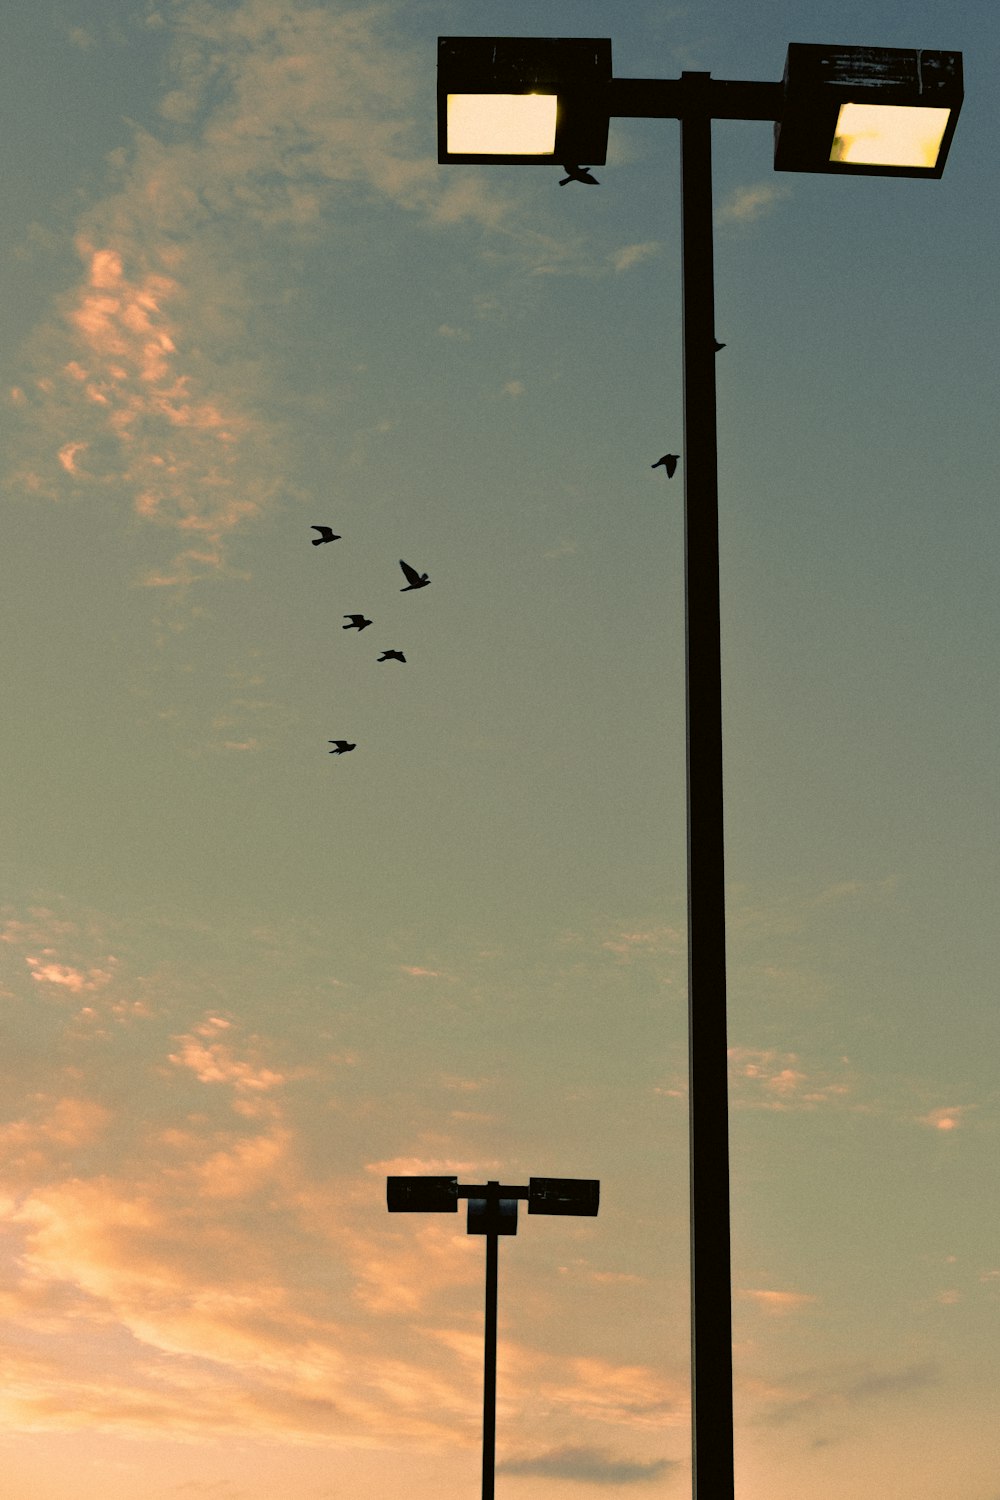 silhouette of birds flying over the street light during sunset